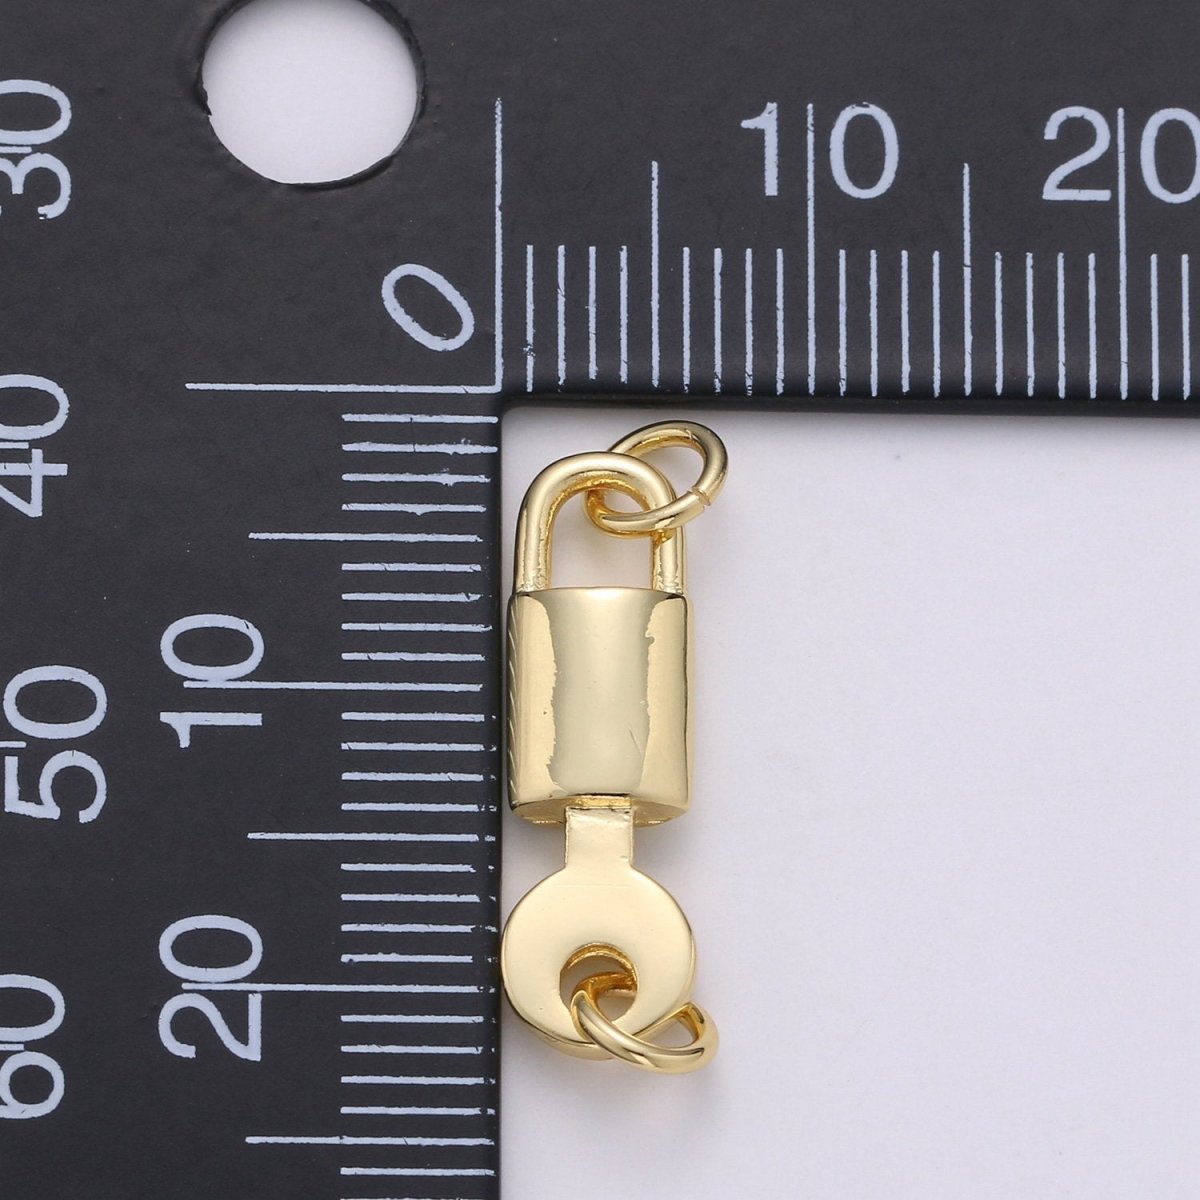 14k Gold Filled Lock Key Pendant Charm, Dainty Key Pendant Charm, Gold Filled Lock F-448 - DLUXCA